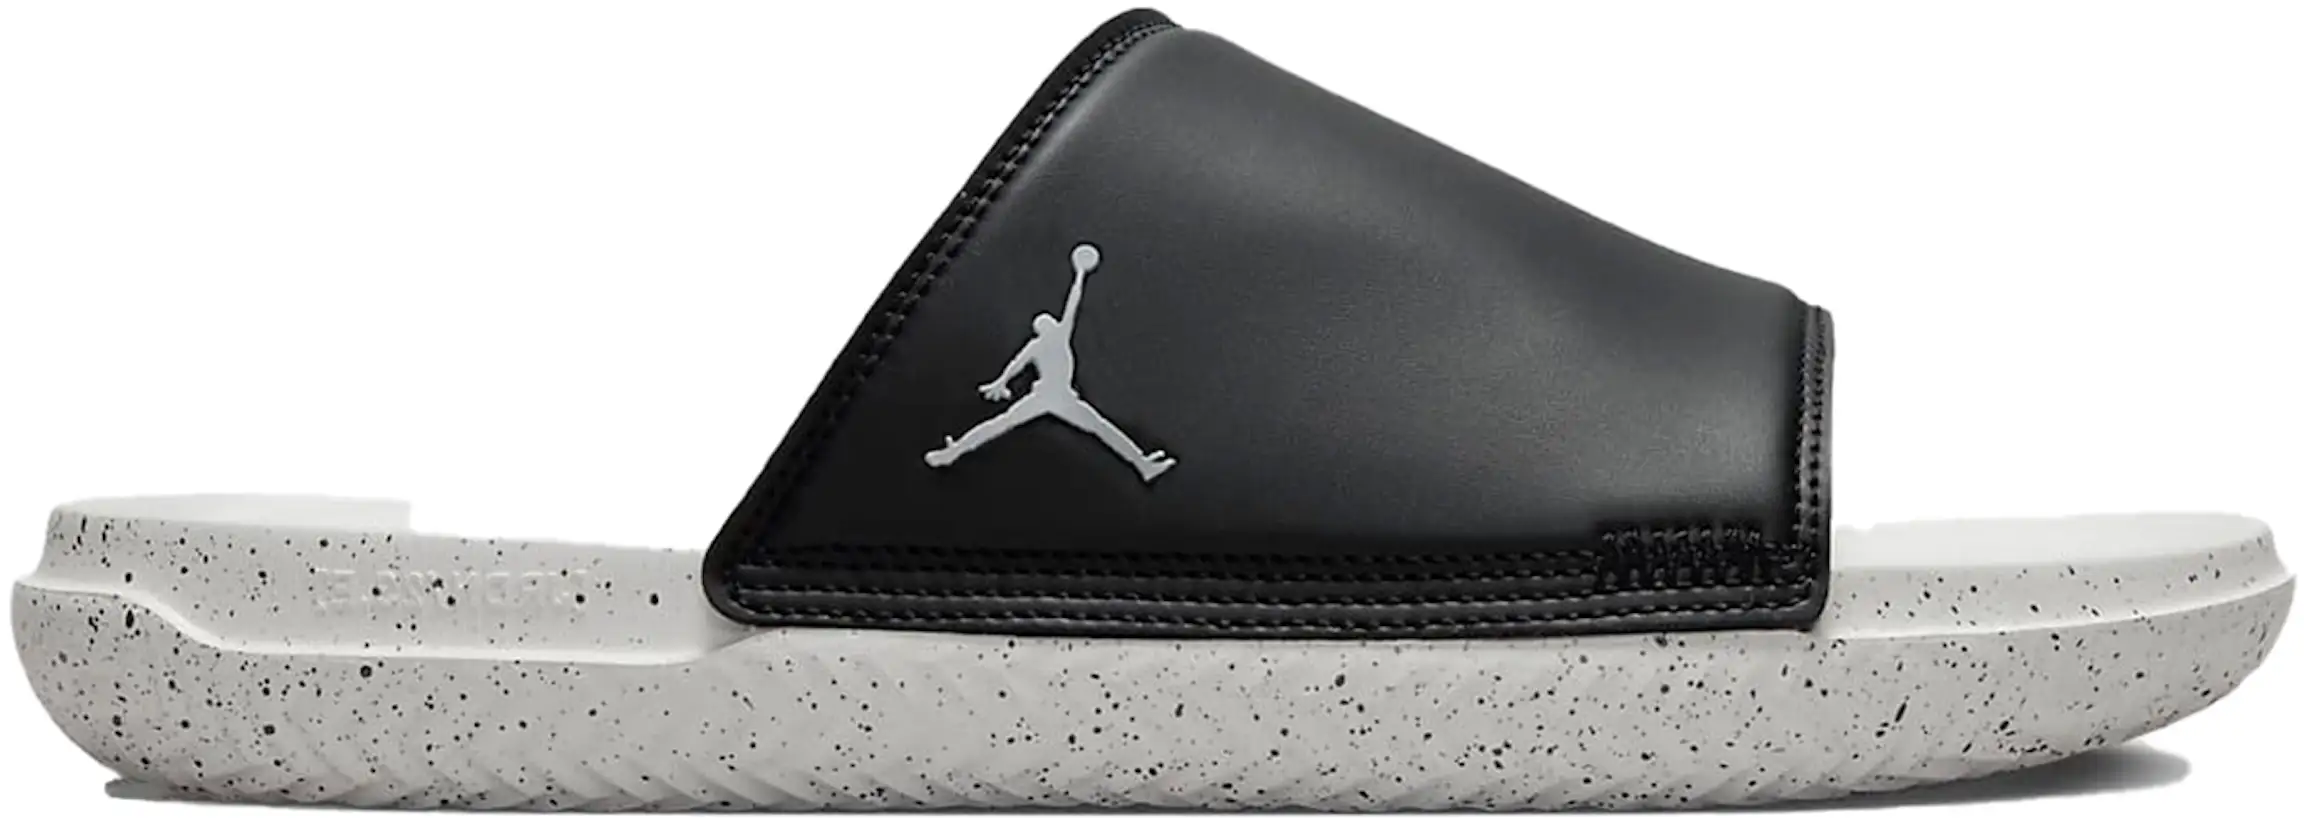 Air Jordan Play Slide Black Cement ?fit=fill&bg=FFFFFF&w=576&h=384&fm=webp&auto=compress&dpr=4&trim=color&updated At=1676478601&q=35